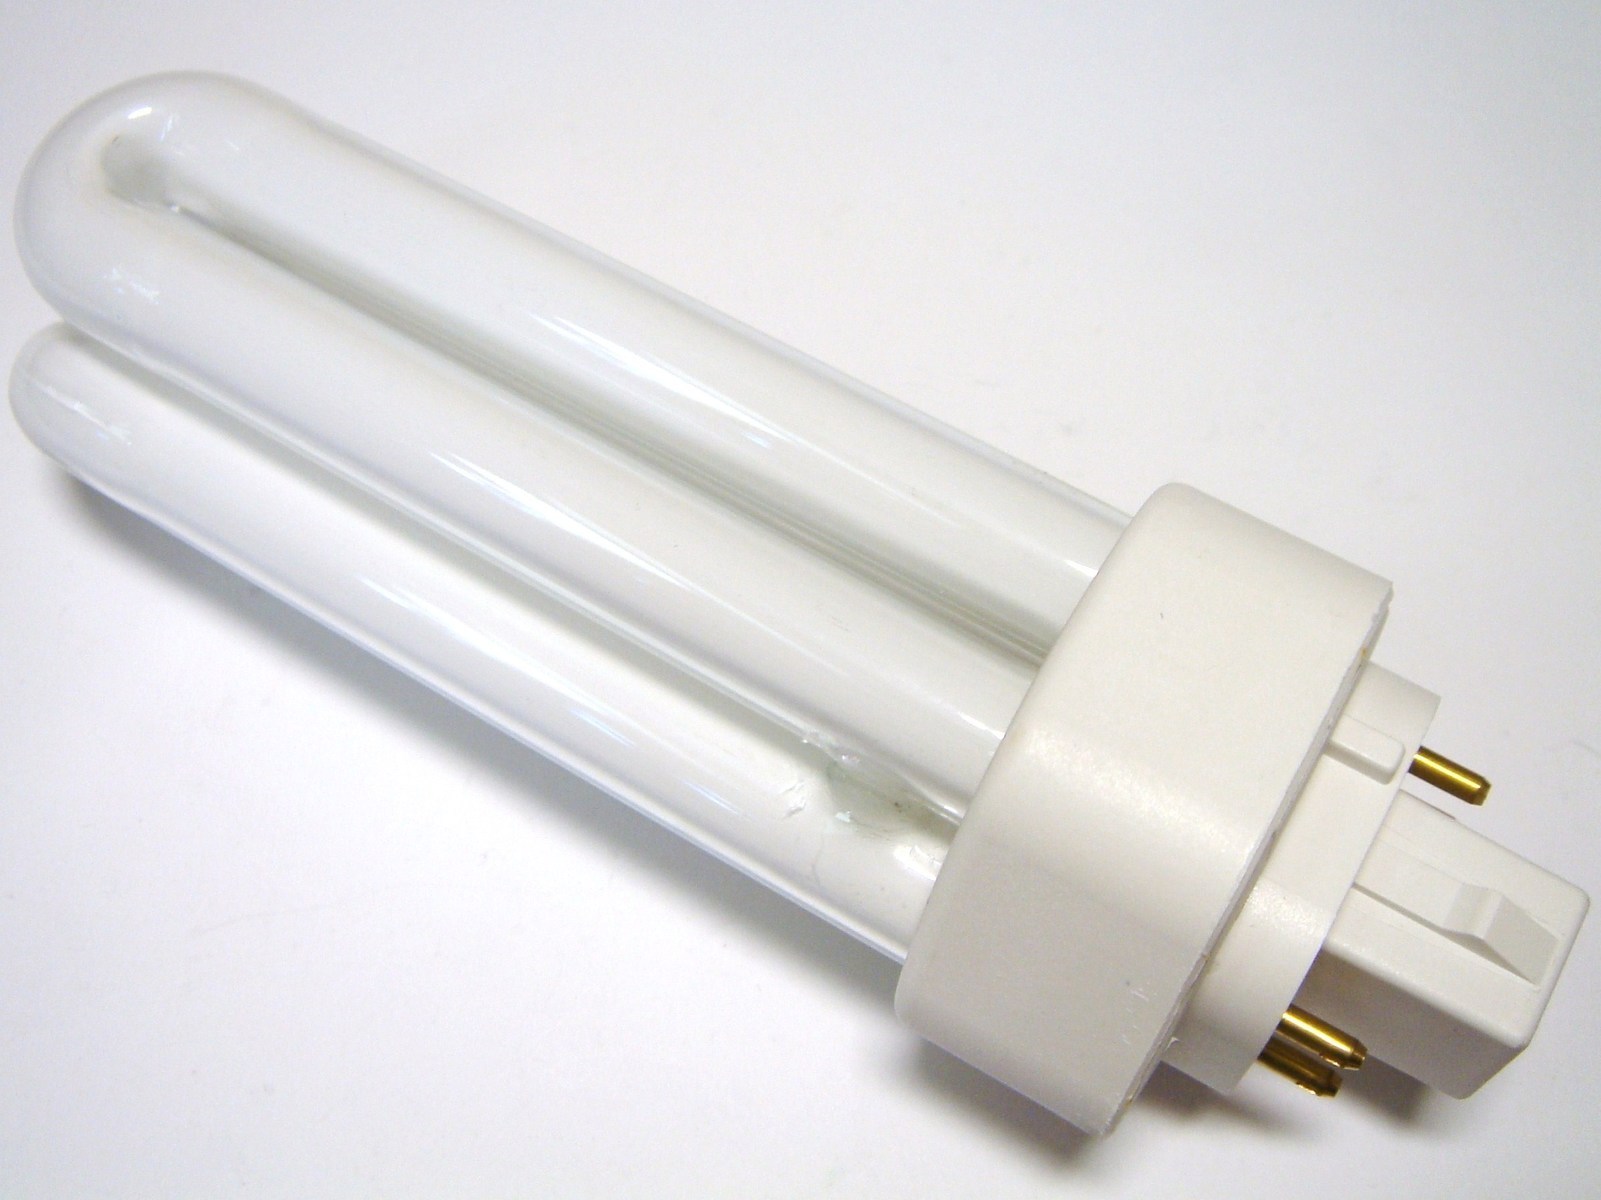 Компактная-люминесцентная лампа 32Вт - 1,6 €, Osram Dulux T/E Plus, 32W .